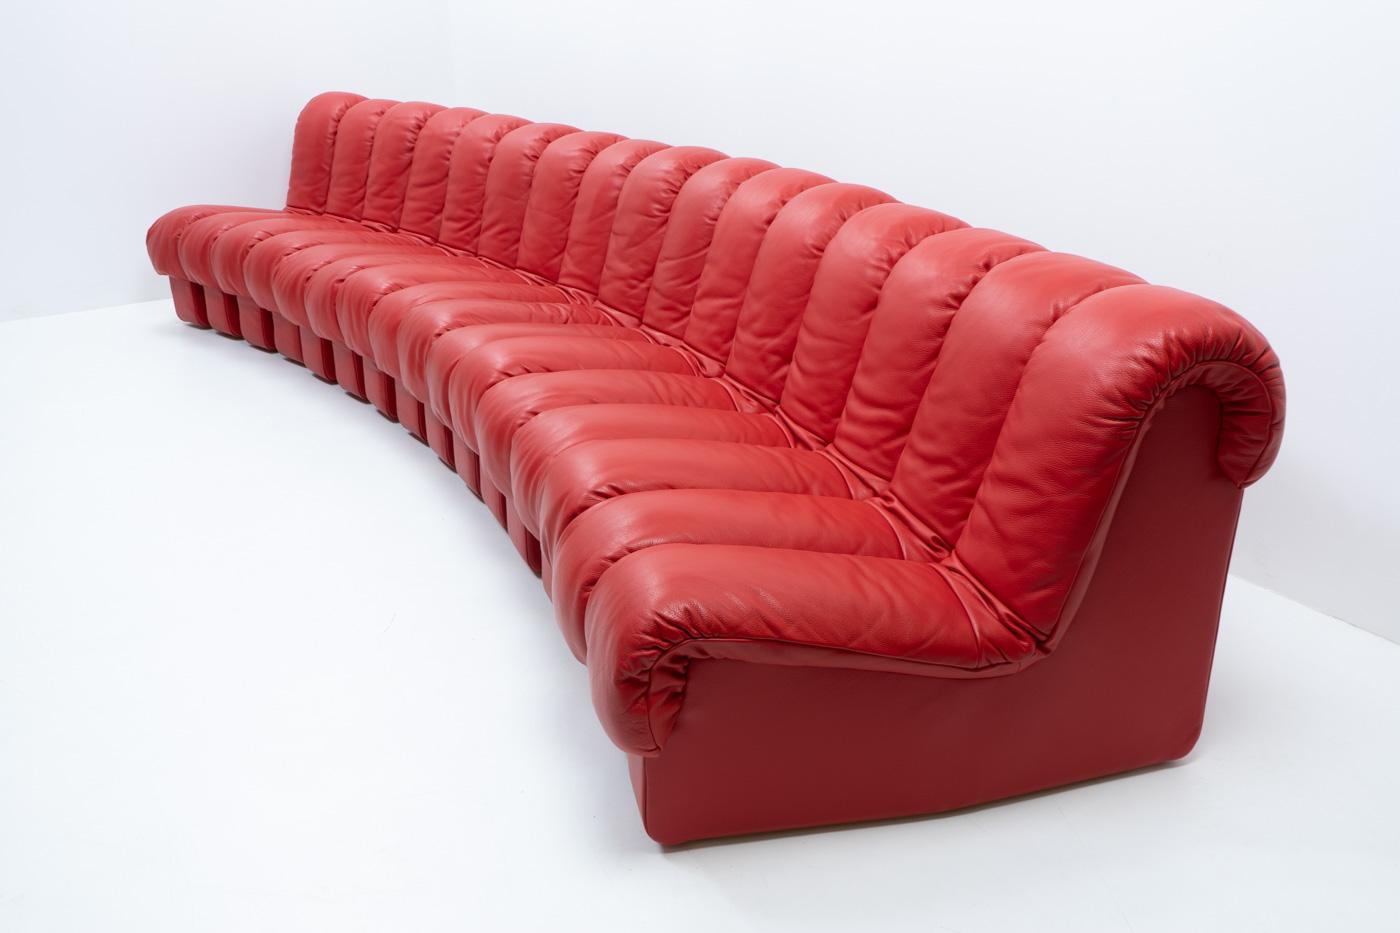 Swiss De Sede DS-600 “Non- Stop” Sofa (16 segments) For Sale